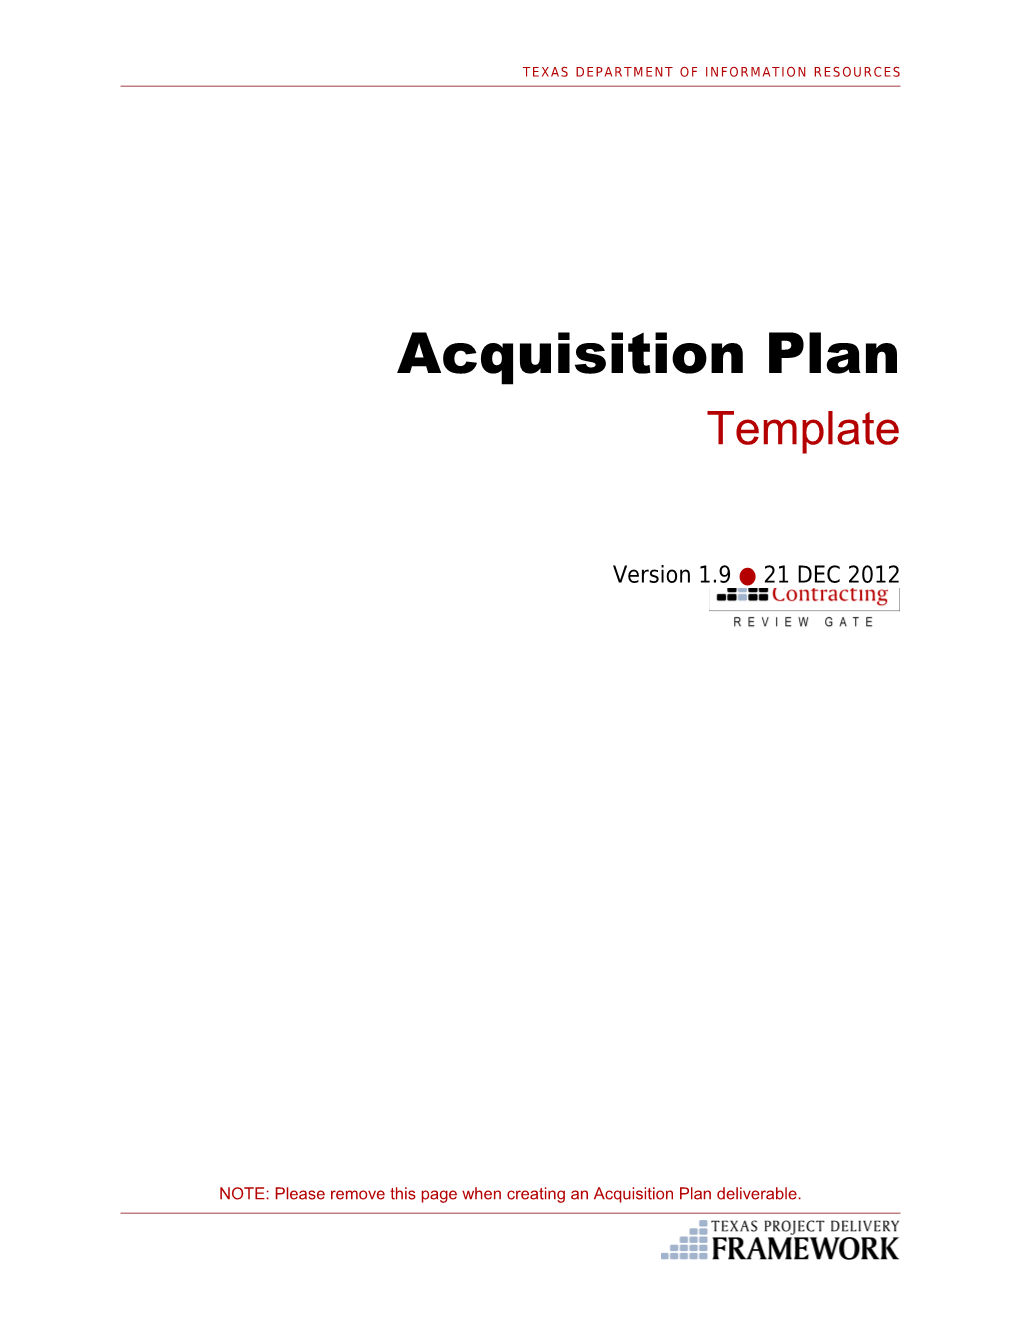 Acquisition Plan Template